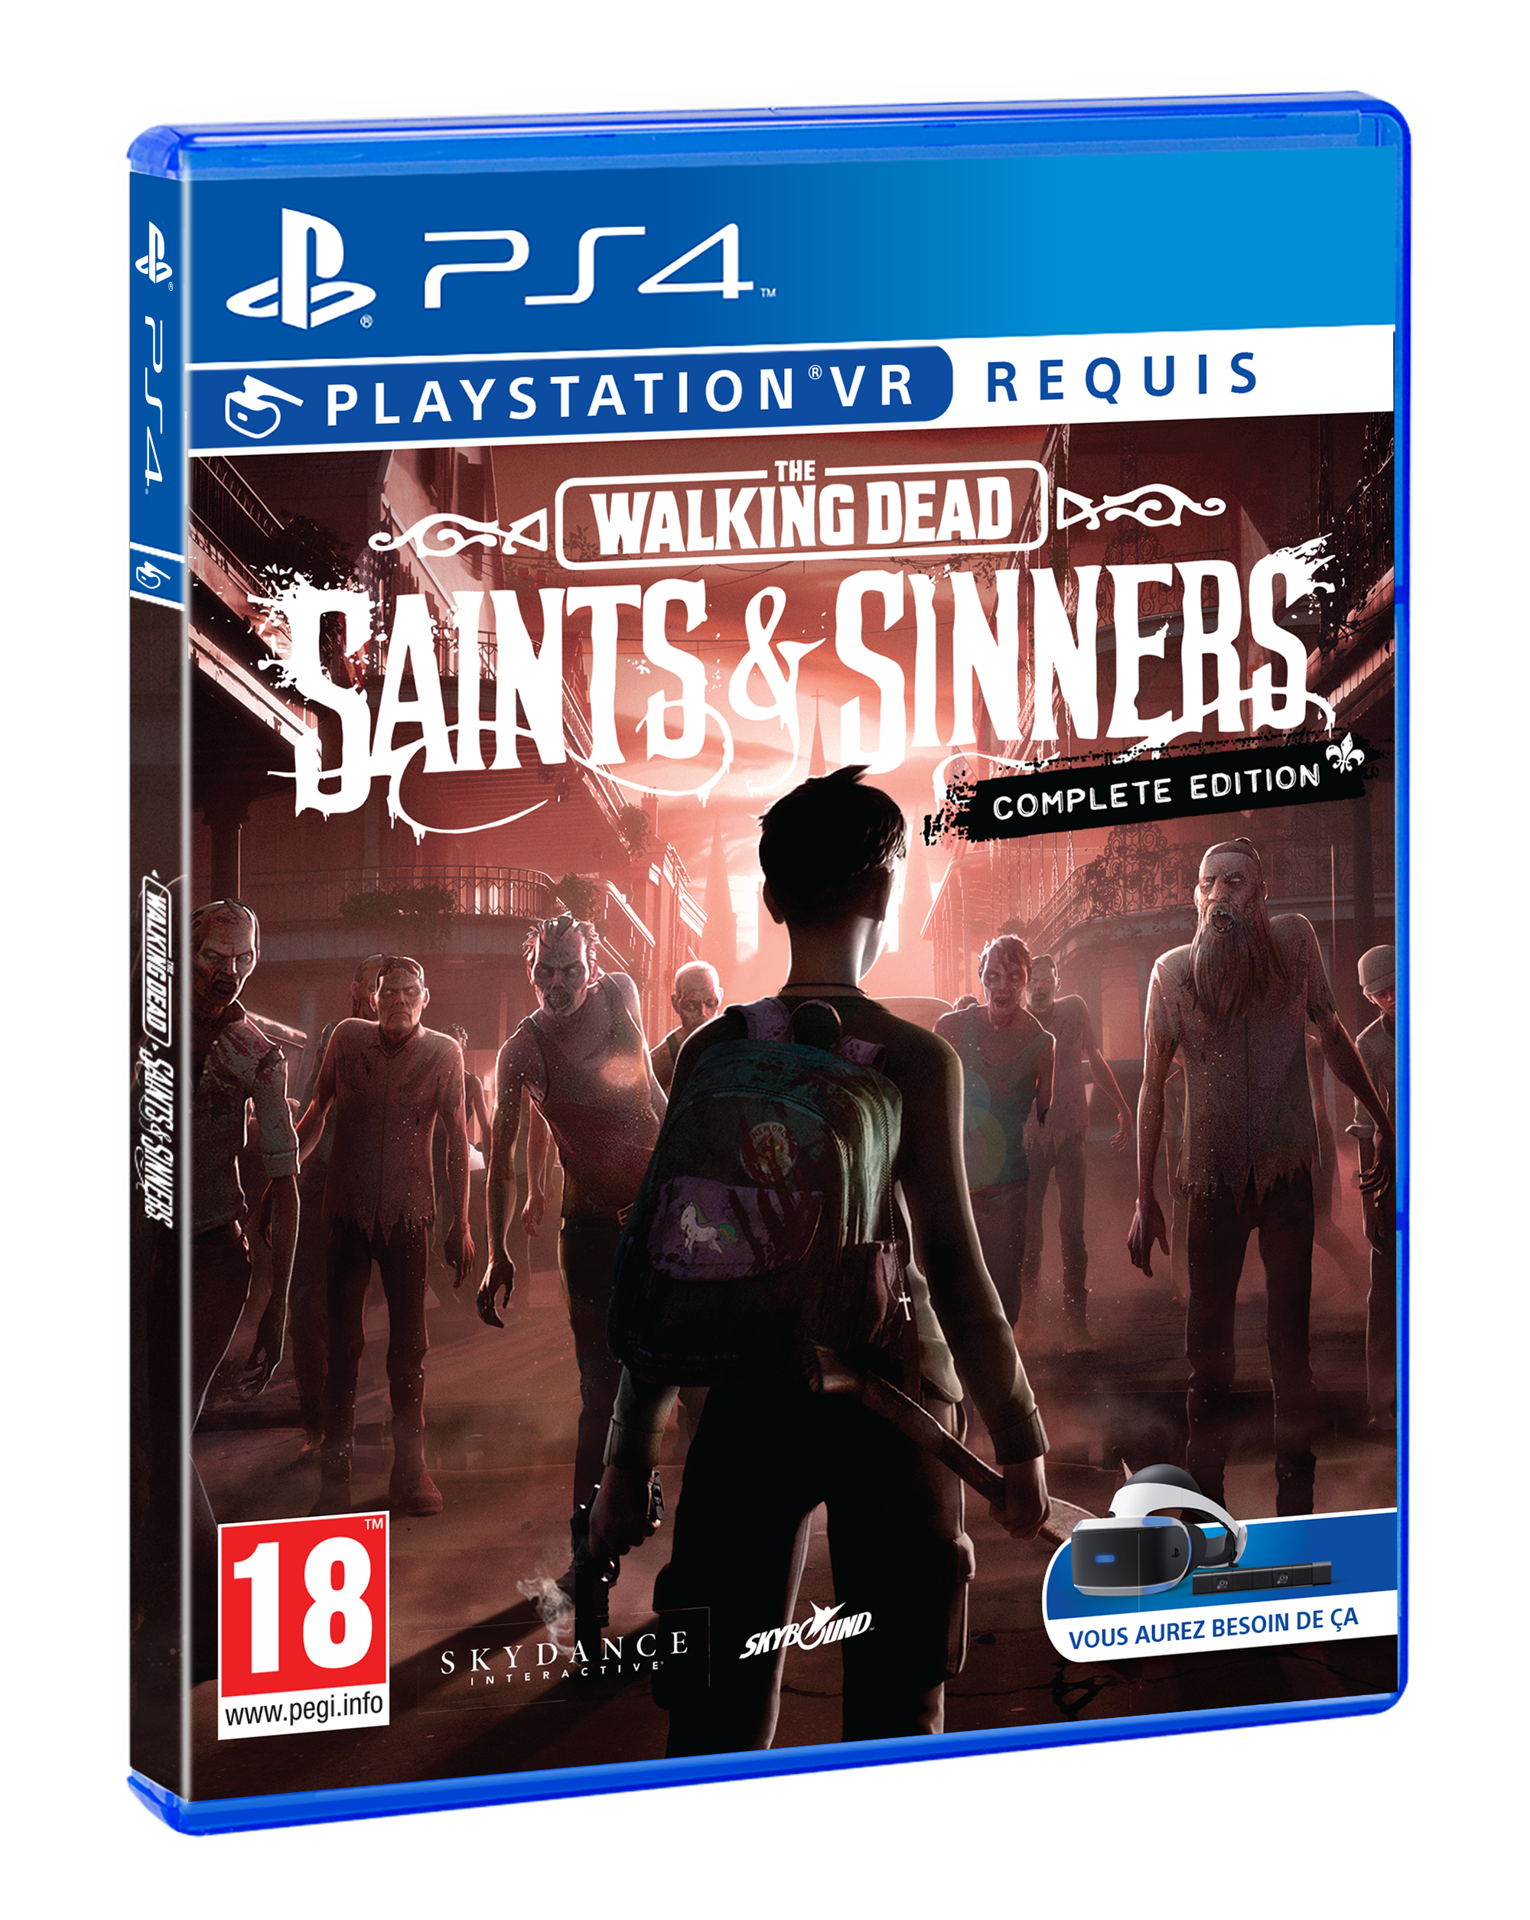 The Walking Dead Saints & Sinners Complete Edition